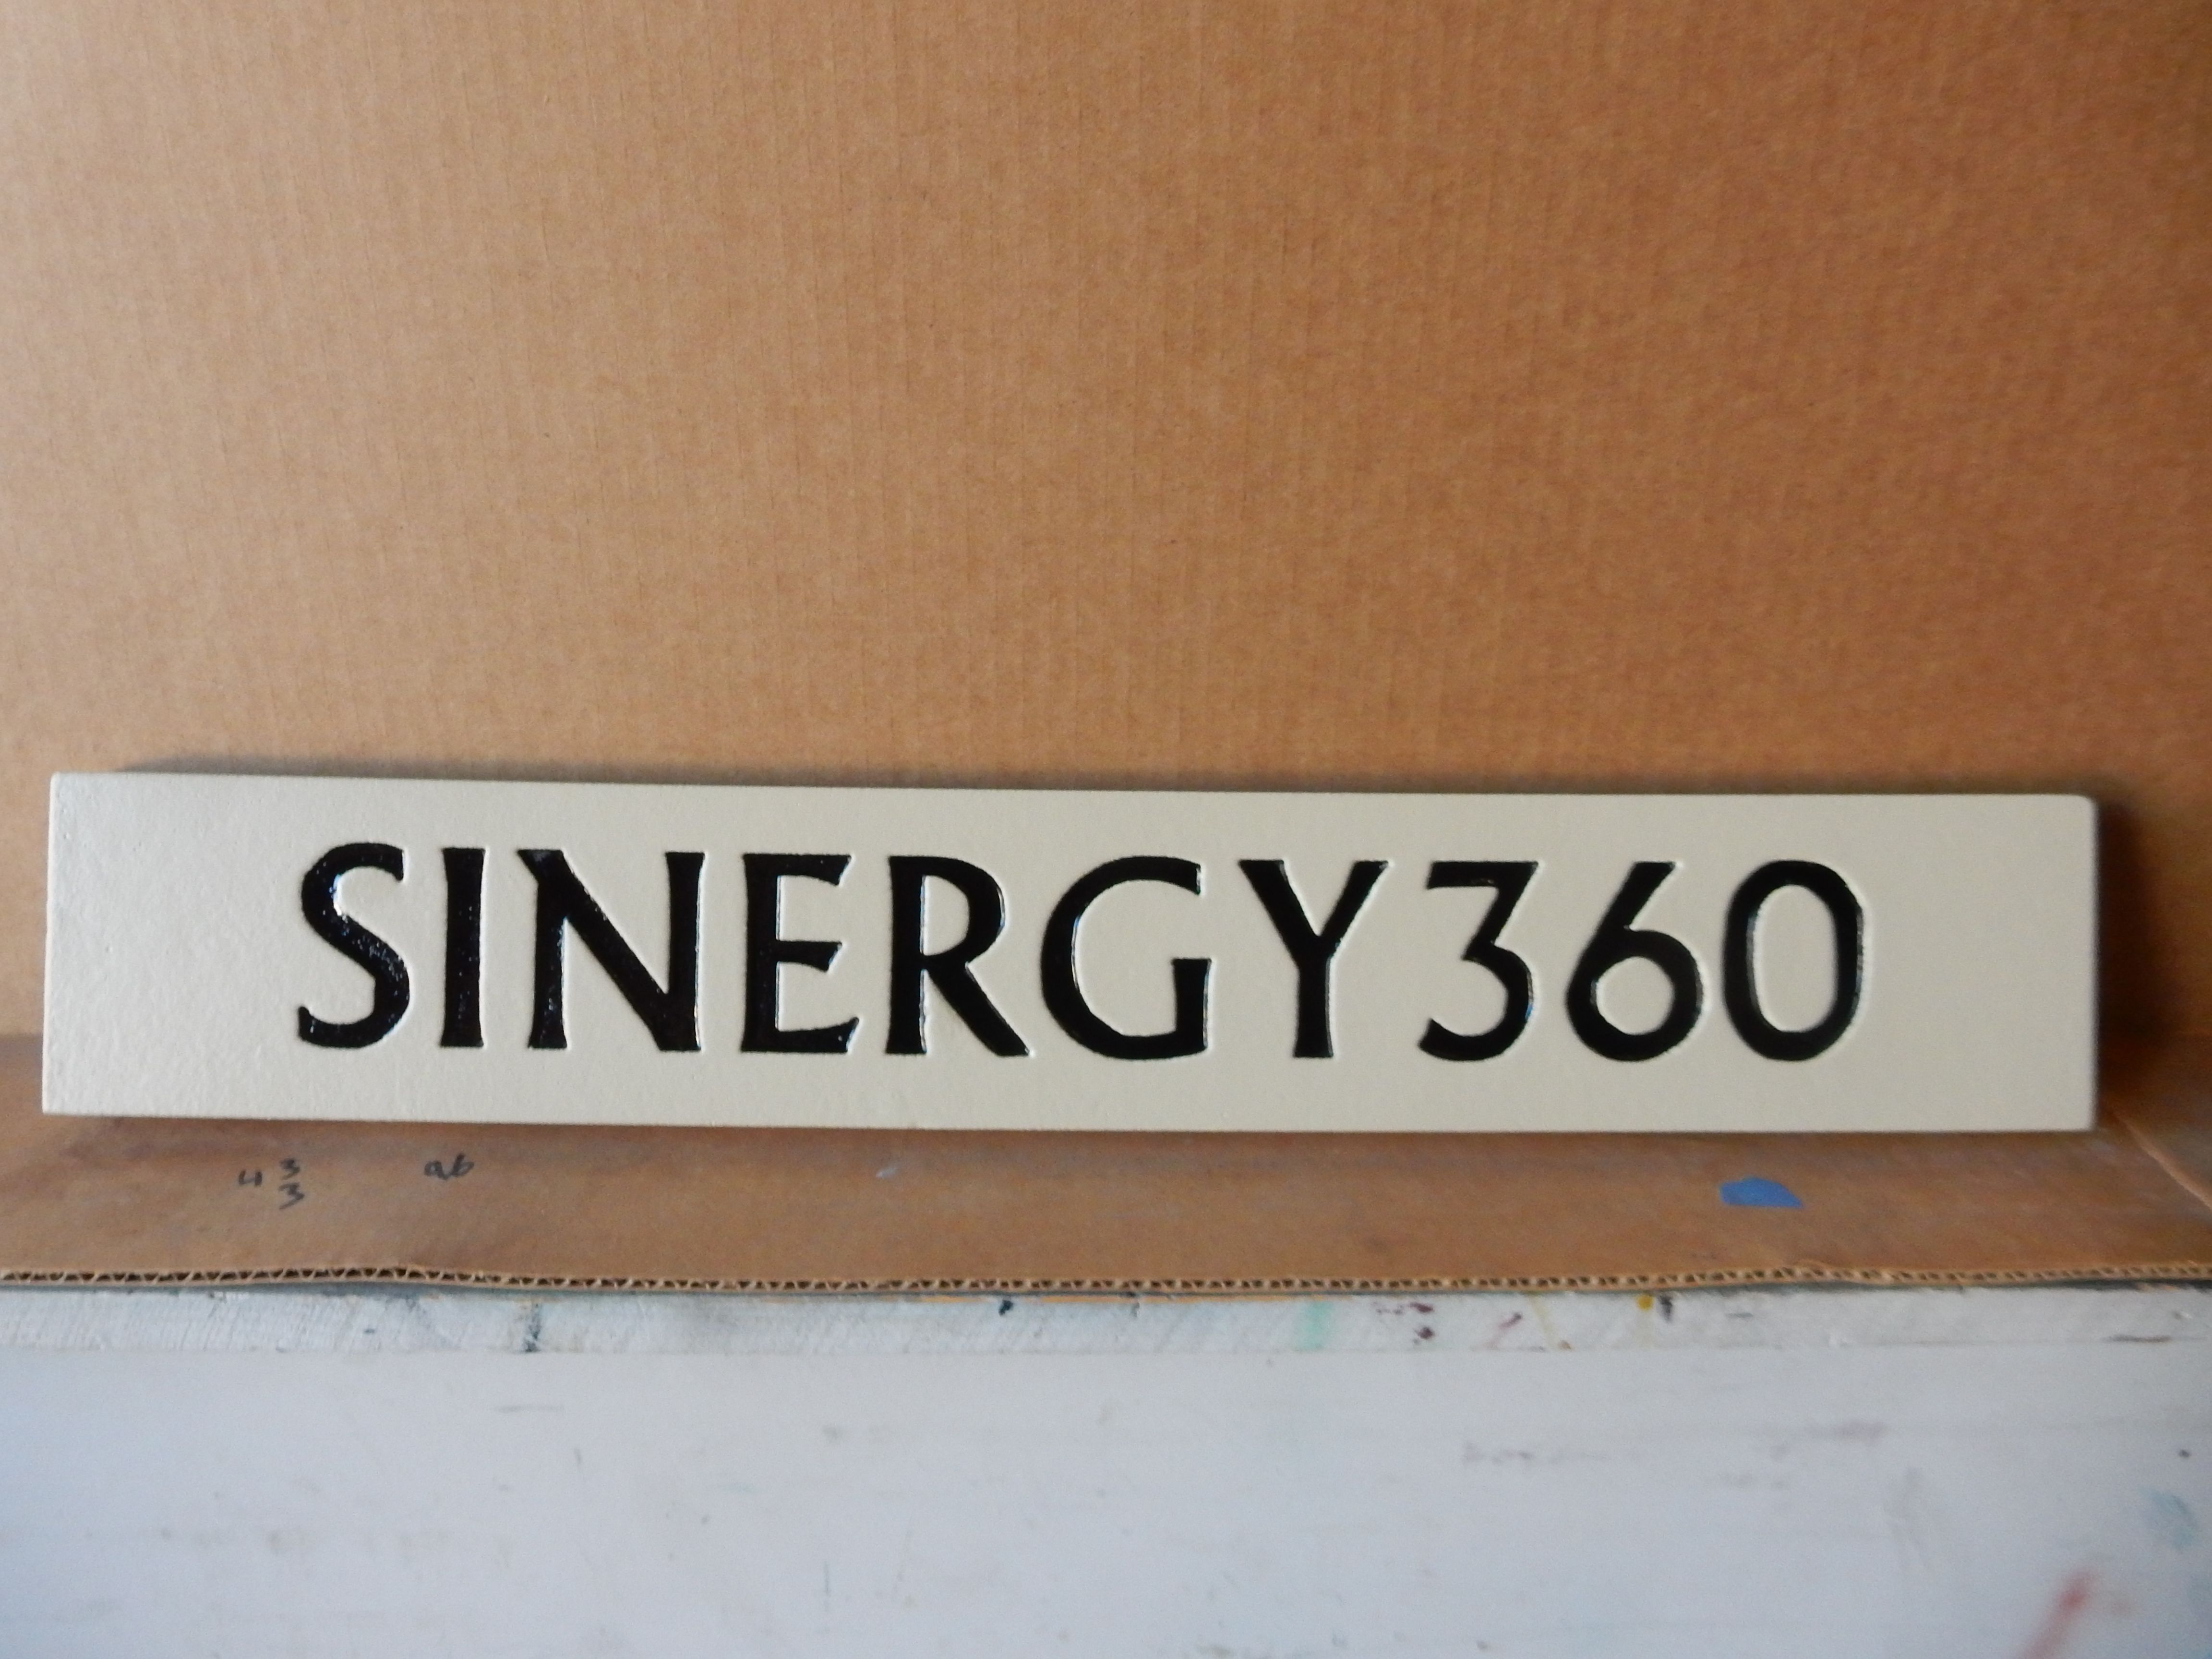 SB28997- Carved and EngravedHigh-Density-Urethane (HDU) Sign for "Synergy 360"